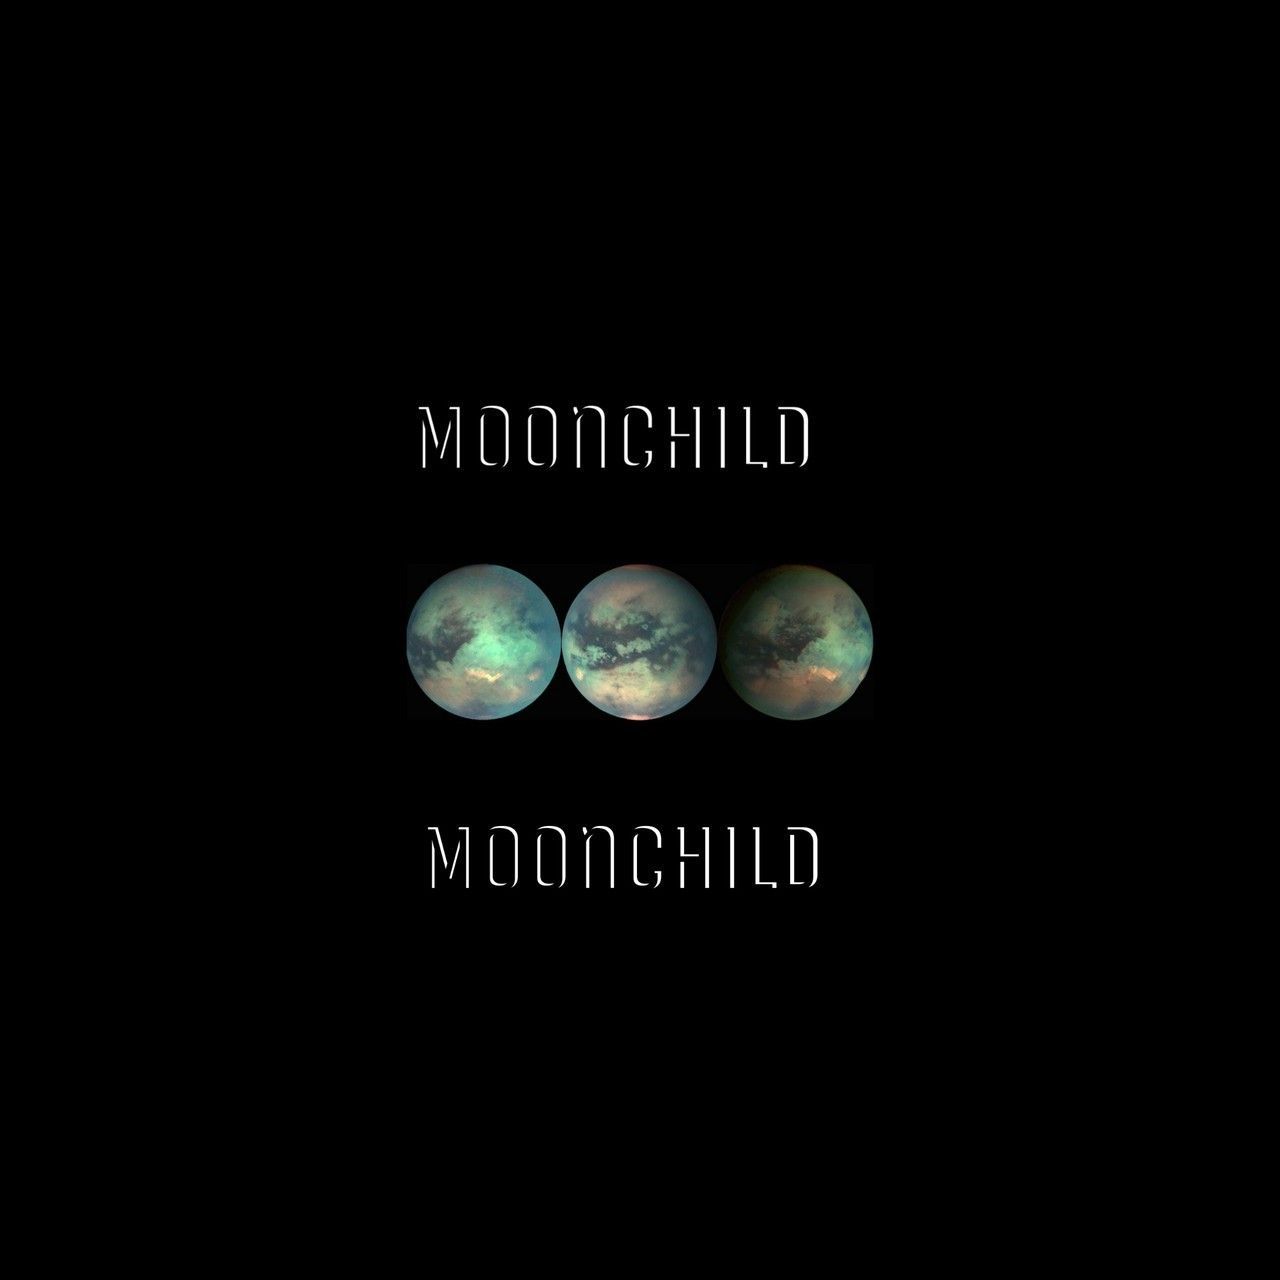 Moonchild Wallpaper Free Moonchild Background